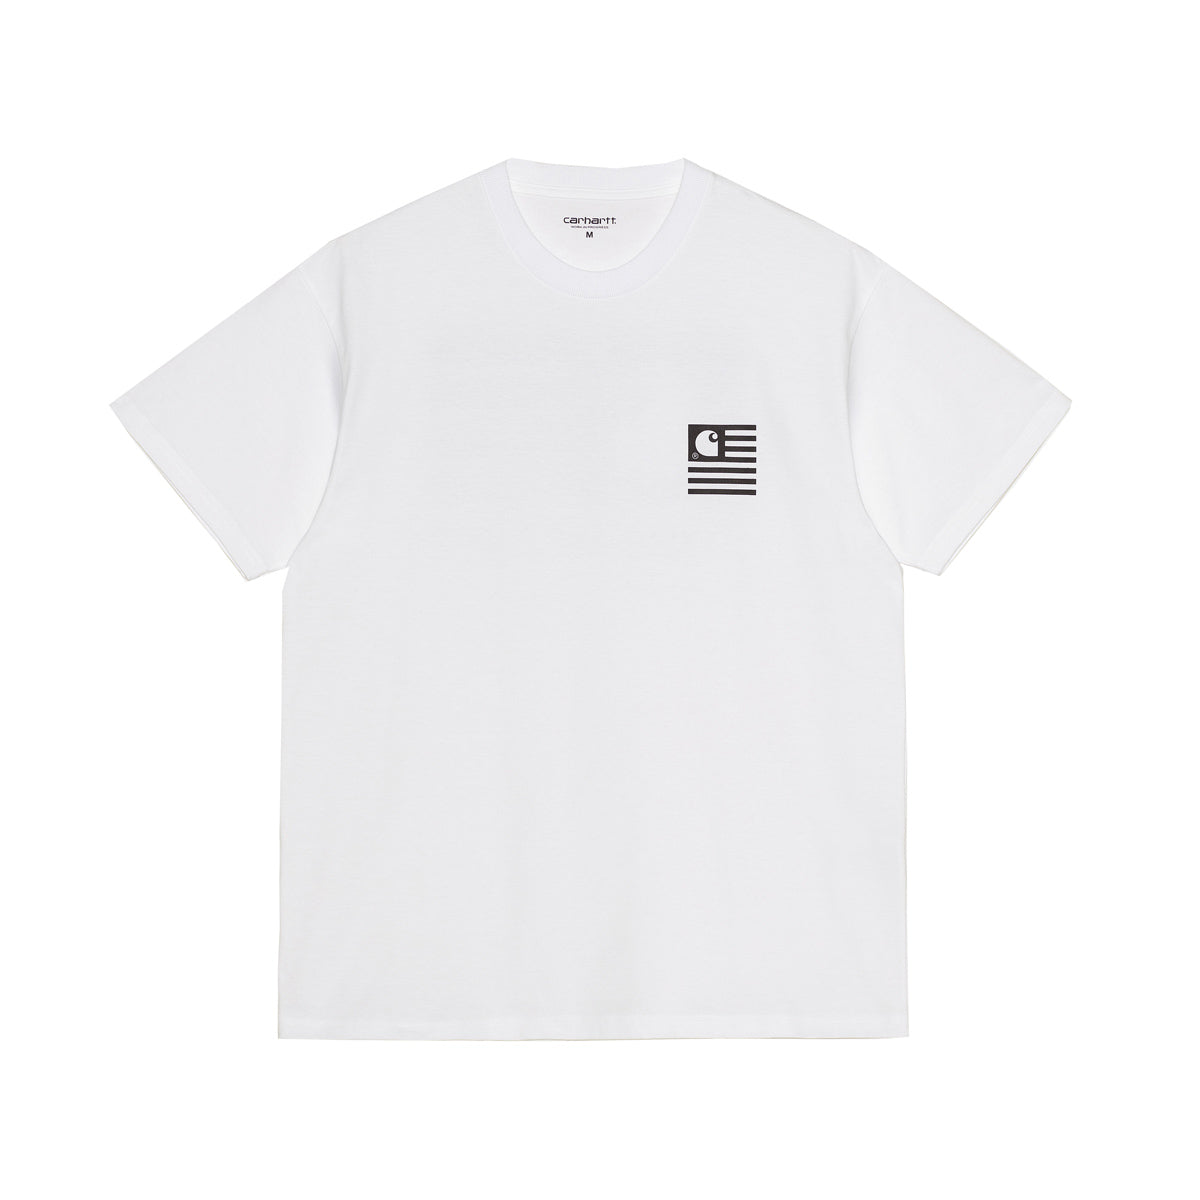 Carhartt WIP S/S Fade State T-Shirt White Black